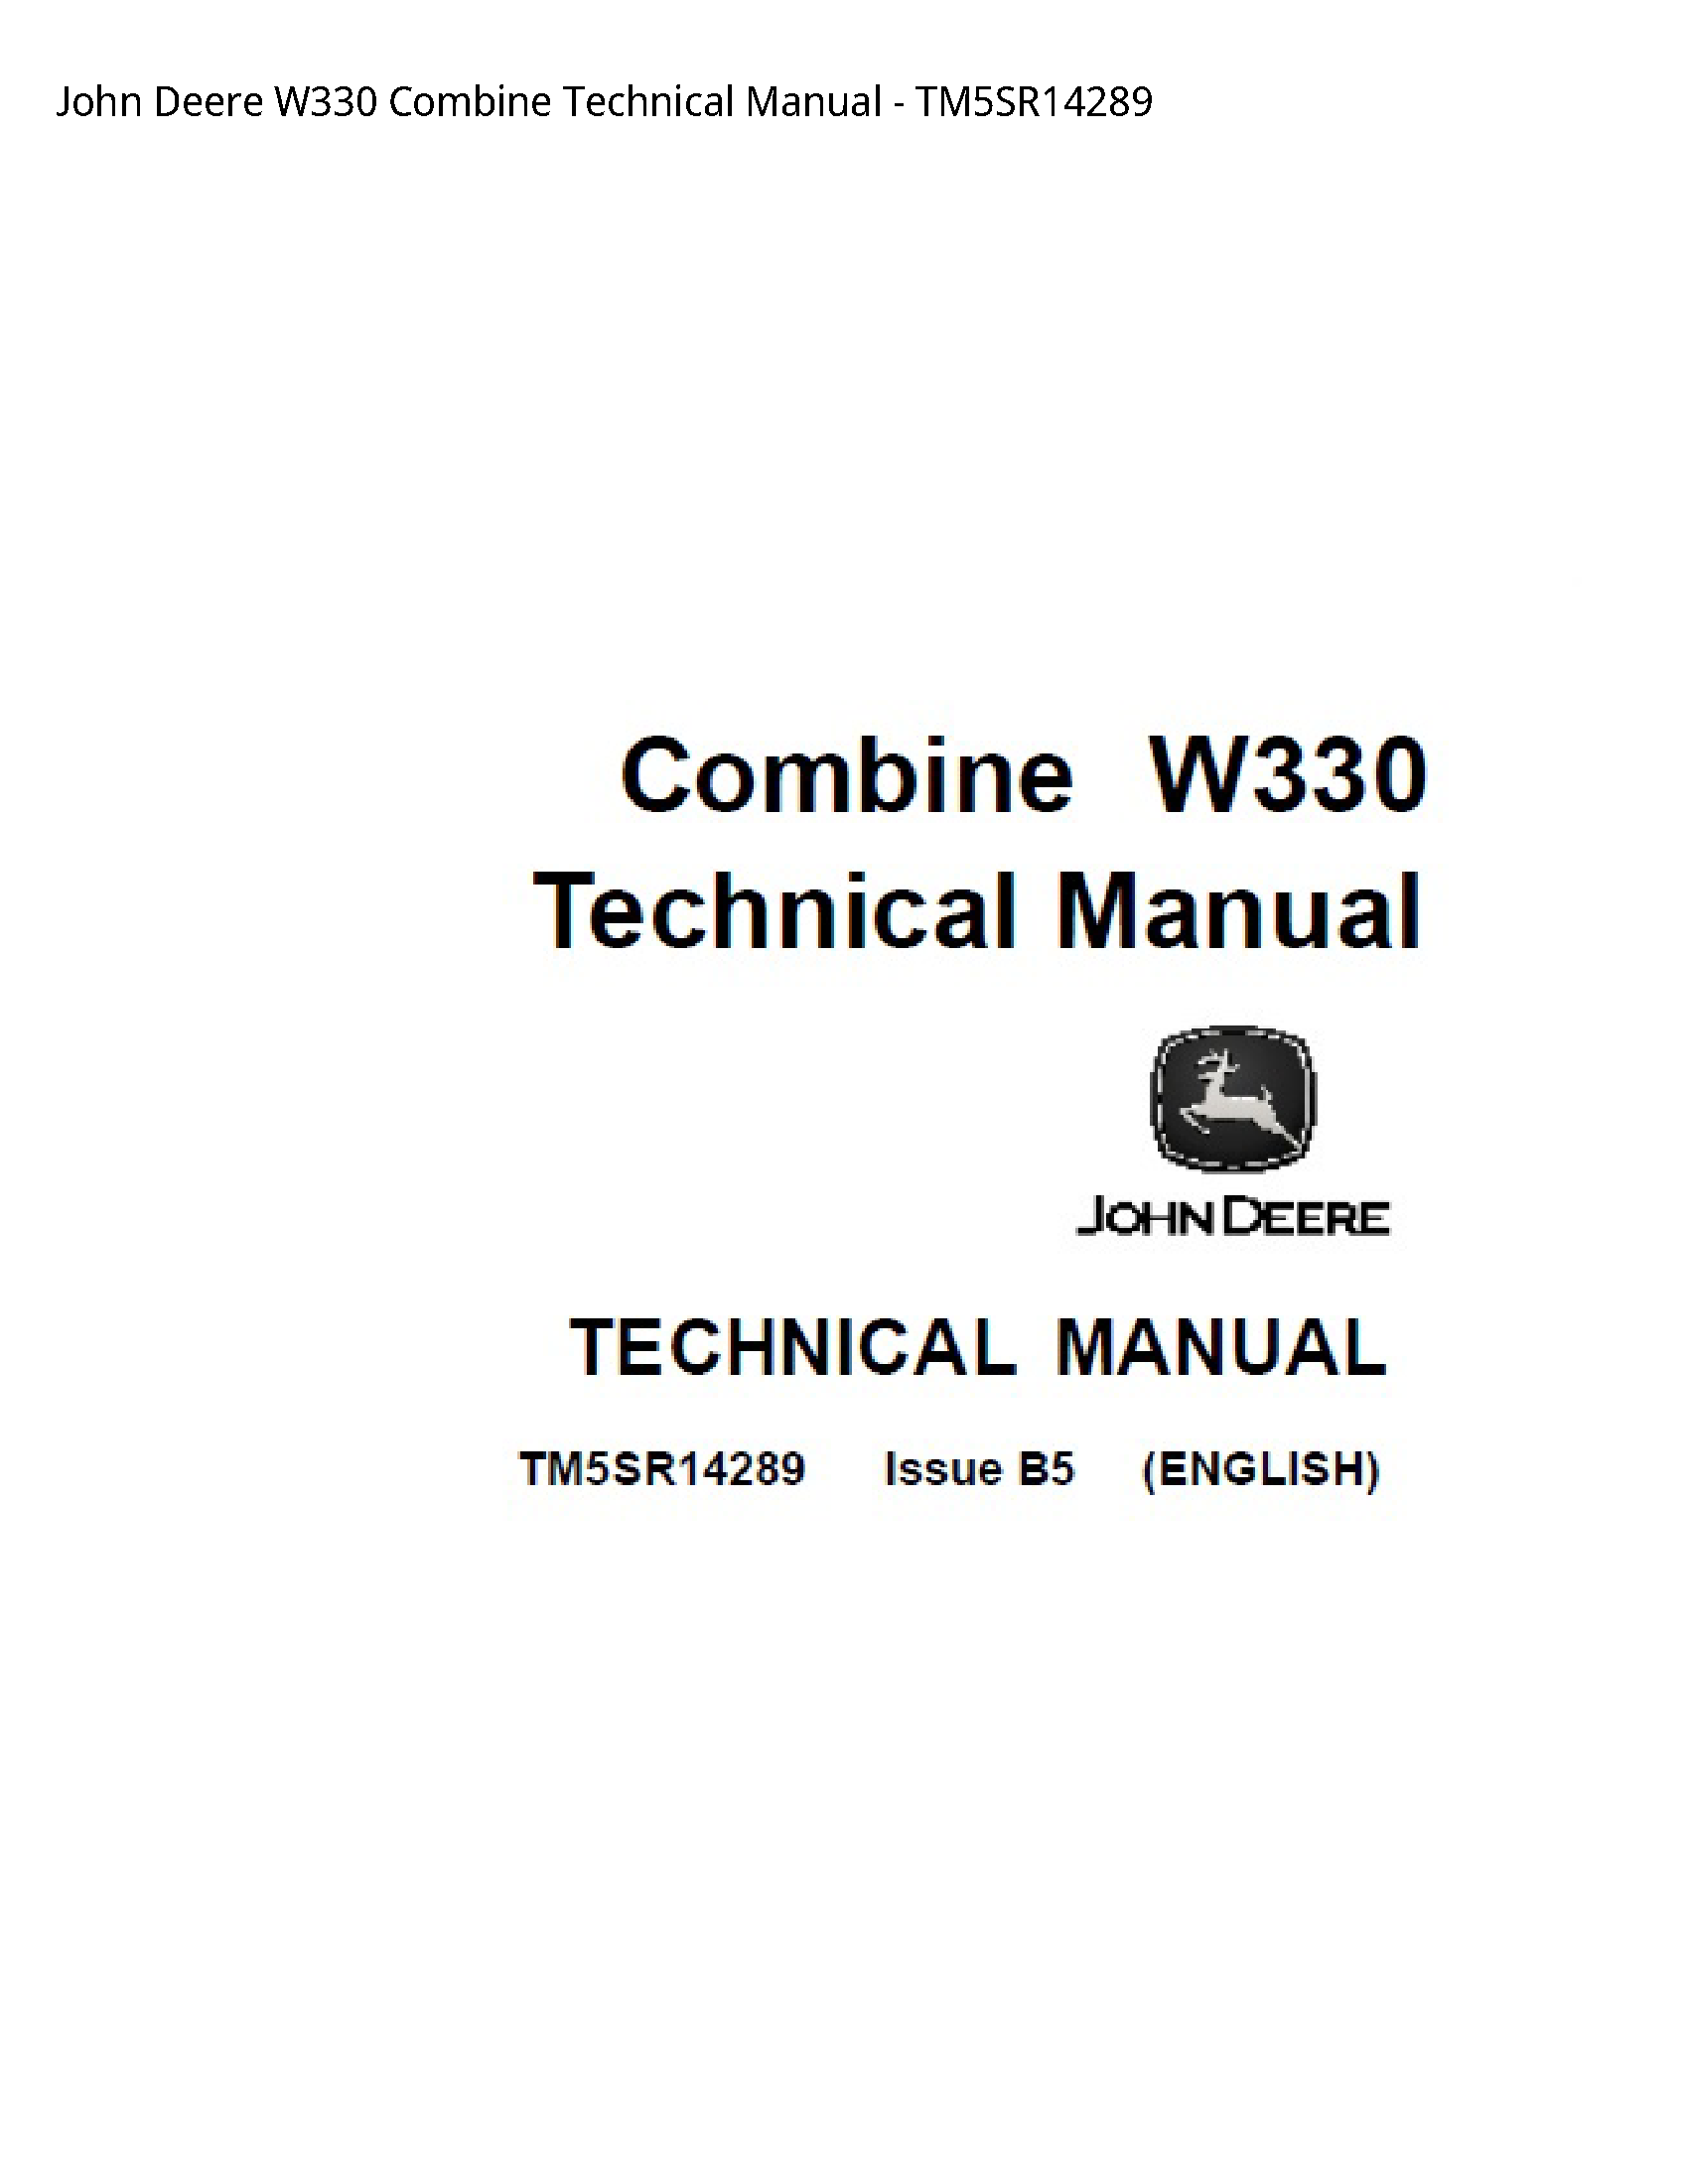 John Deere W330 Combine Technical manual